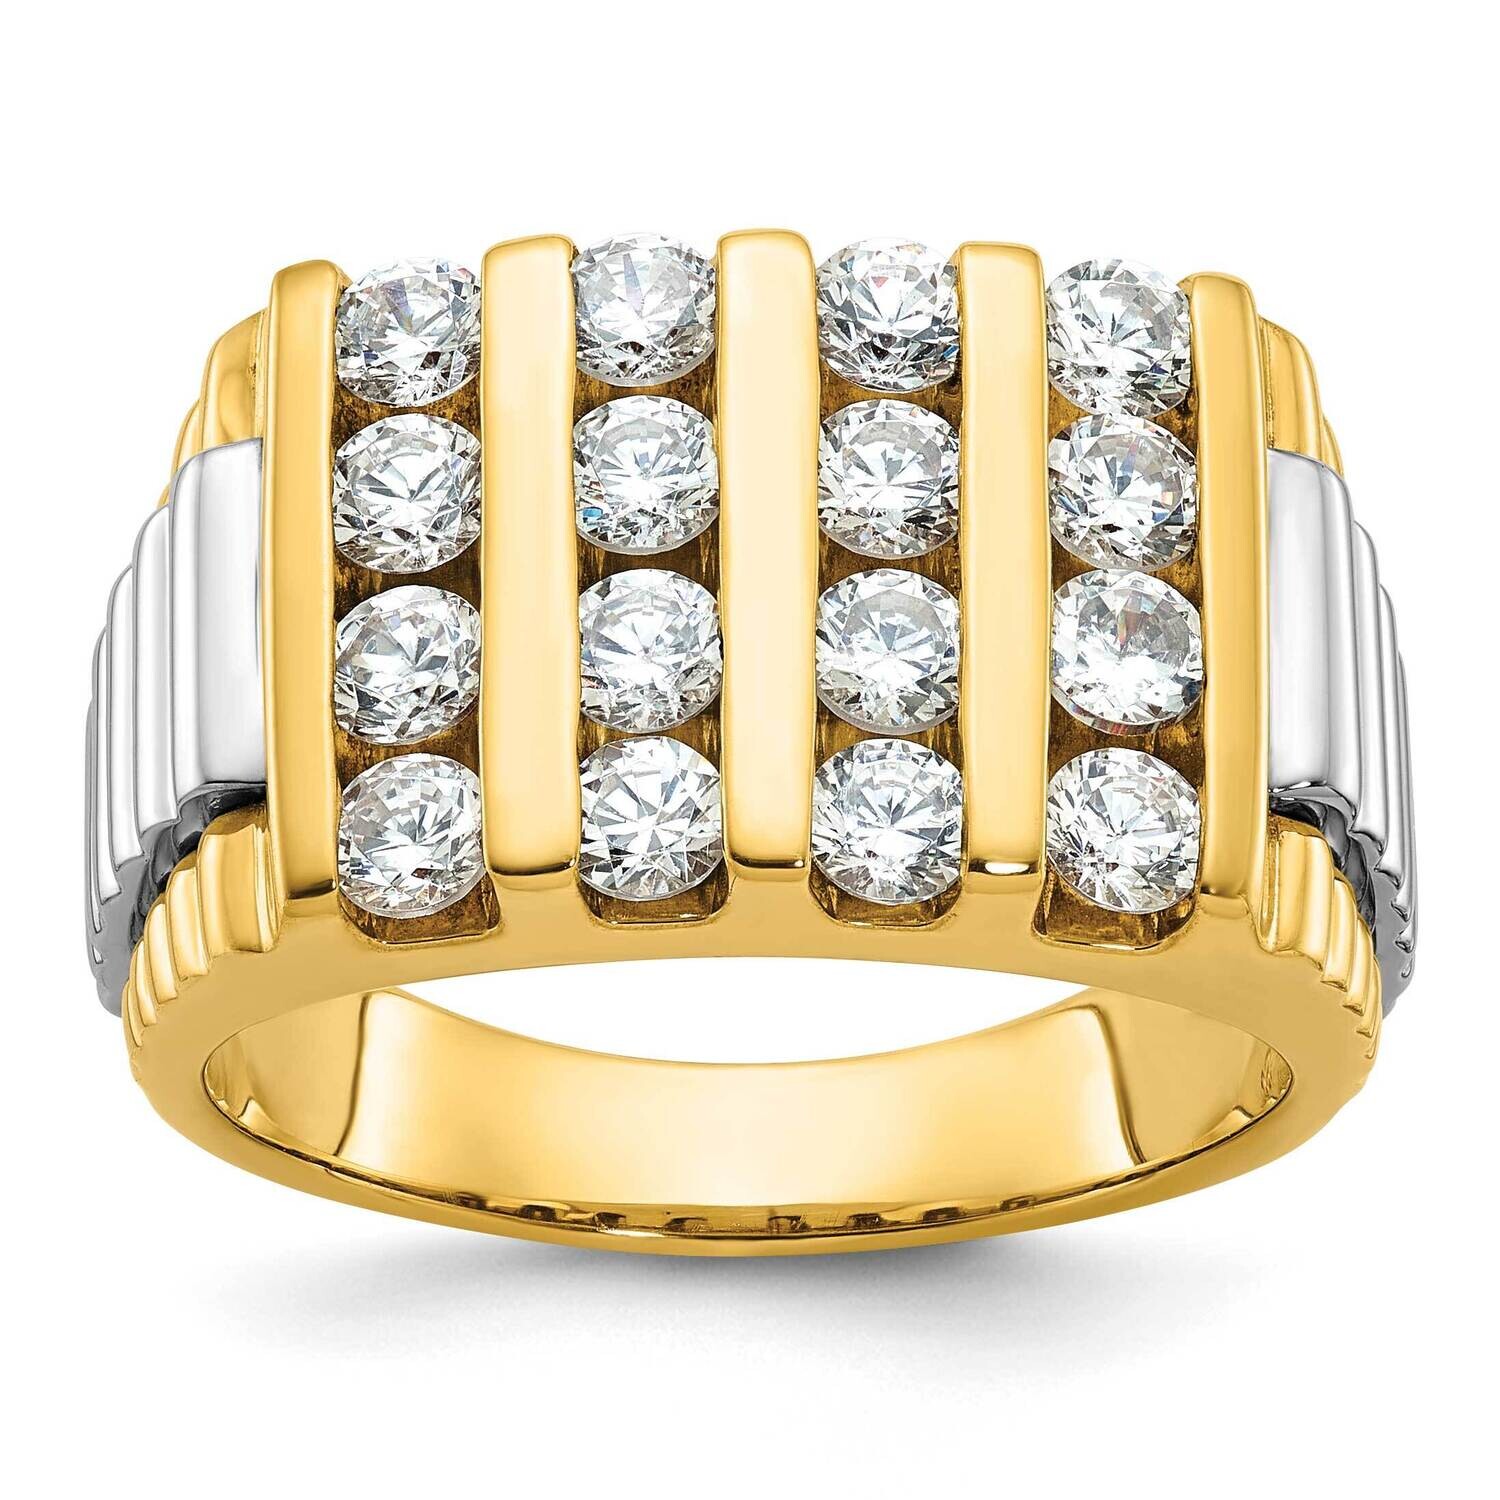 Ibgoodman Men's Polished Textured 4-Row 2 Carat Aa Quality Diamond Ring 14k Two-Tone Gold B58975-4YWAA